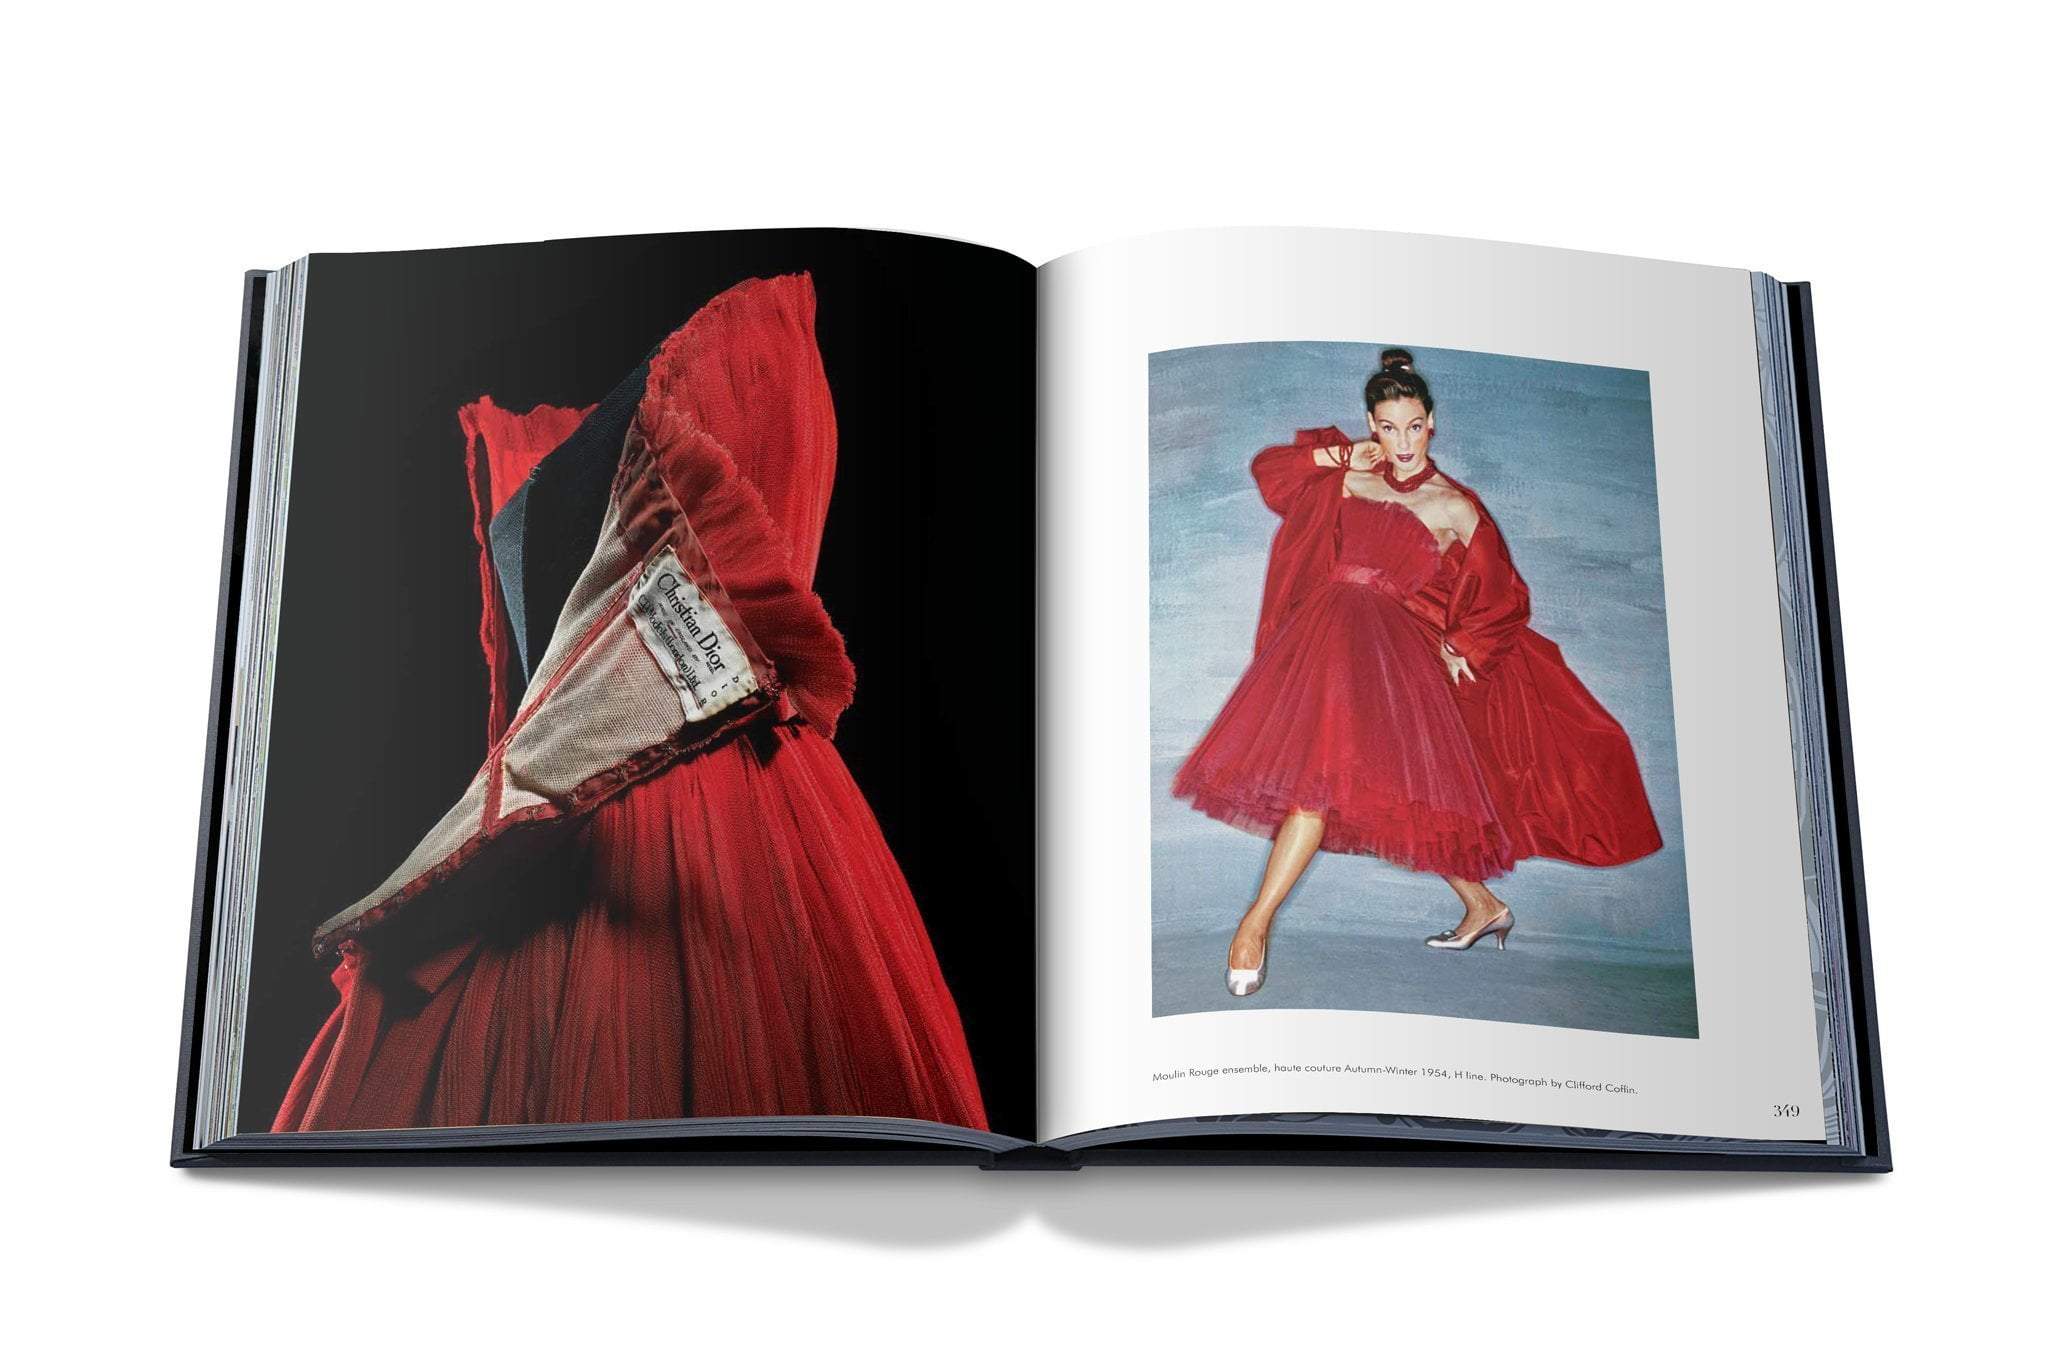 Assouline - Dior by Christian Dior - Coffee Table Book-TOJU Interior